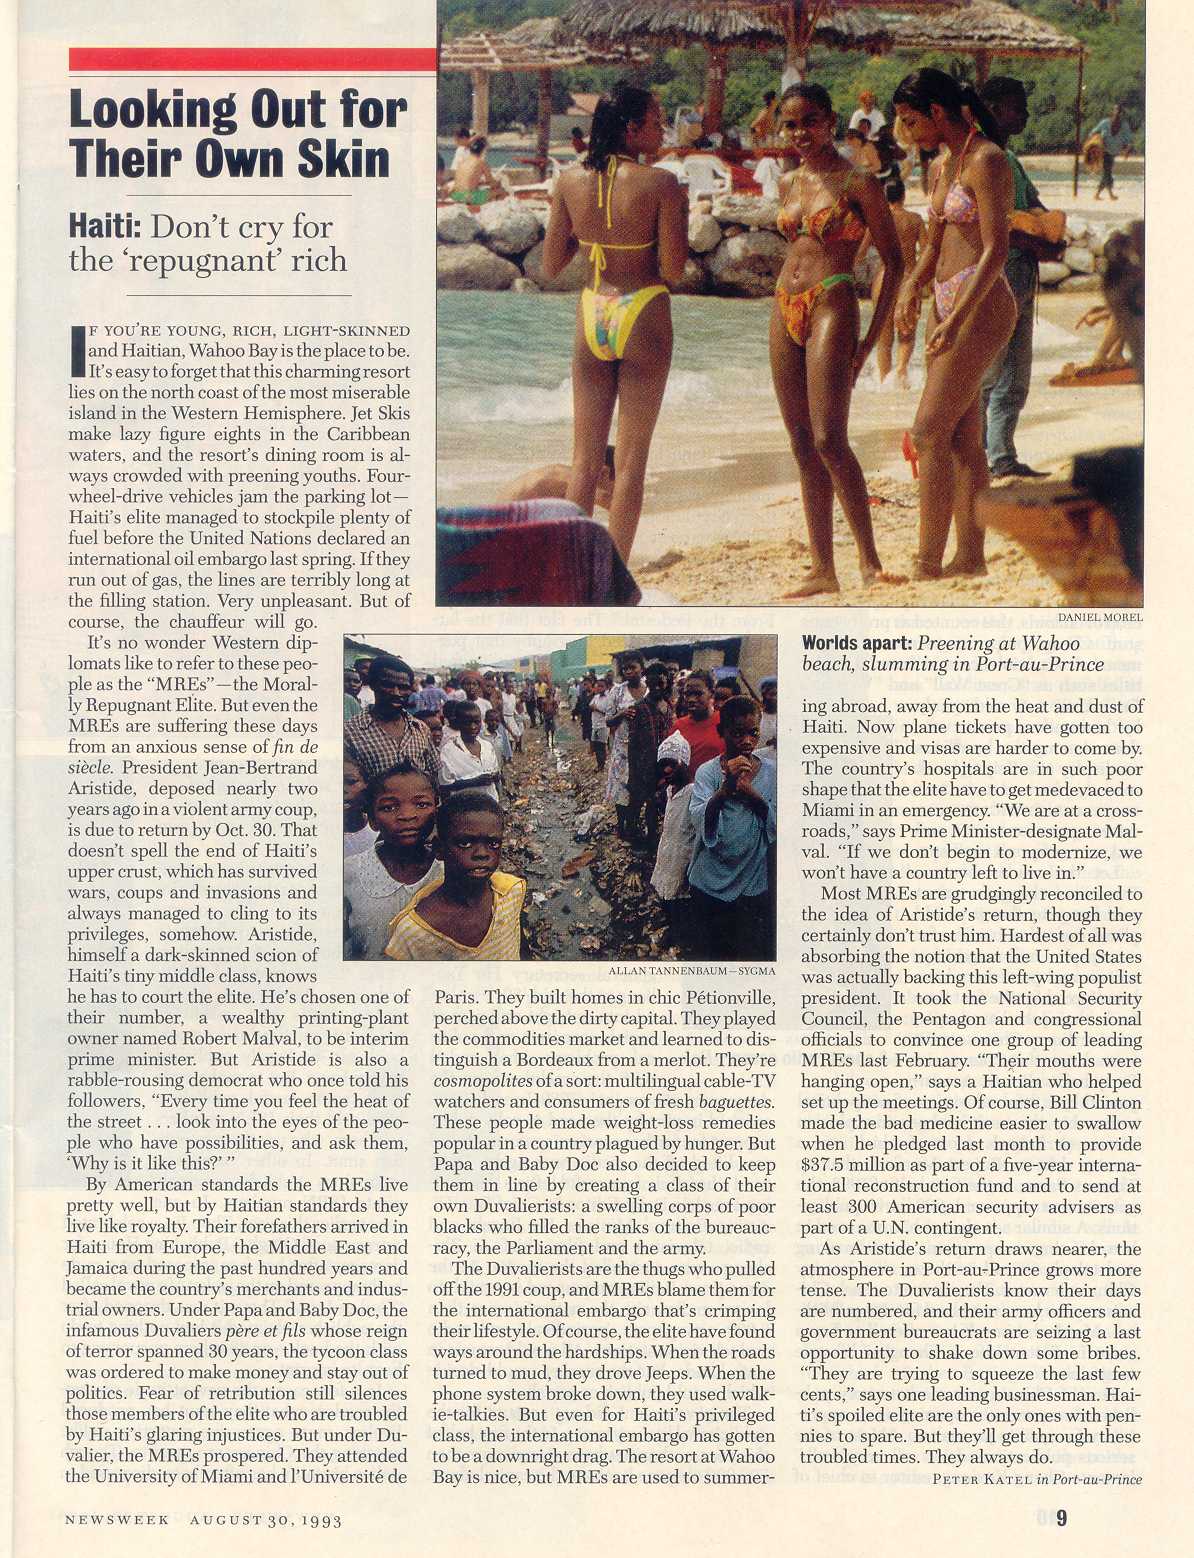 Peter Katel in Port Au Prince, Haiti – NEWSWEEK Magazine (1993)